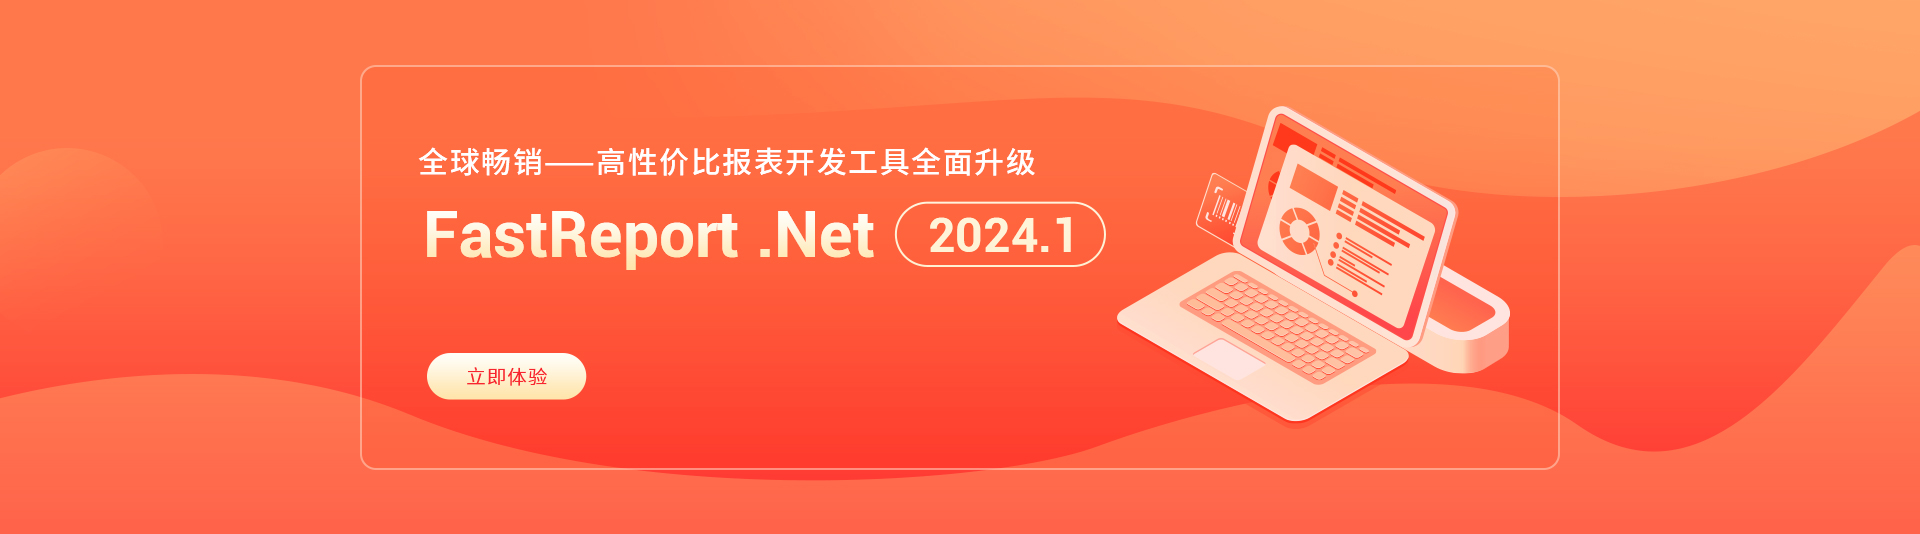 FastReport .Net 2024.1新版正式发布